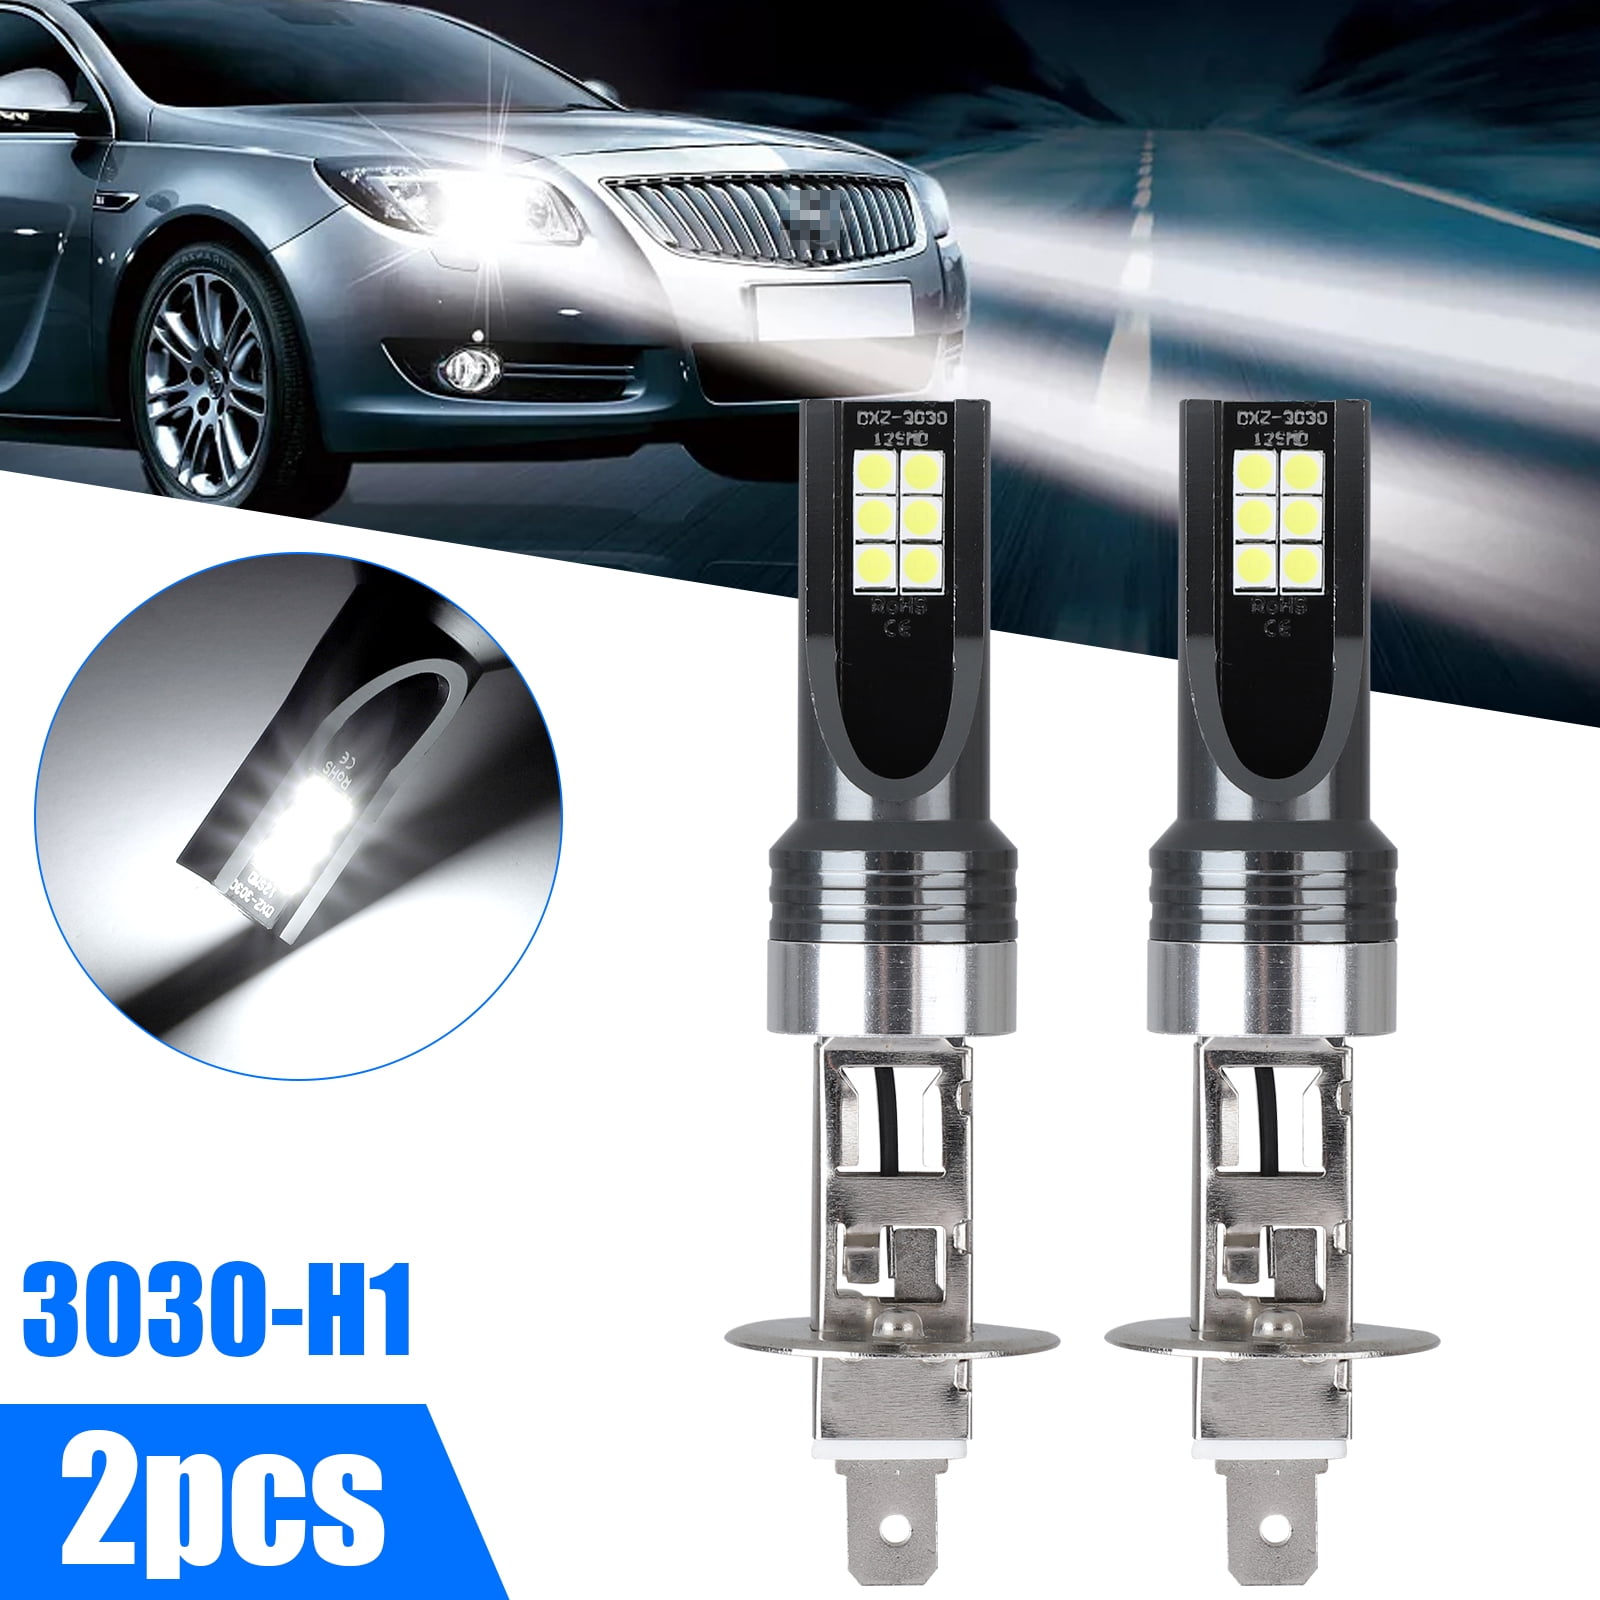 LED Headlight Bulbs, EEEkit Car H1 Light Bulbs High Beam Light Conversion 6500K 14000LM COB Chips Extremely Bright H1 Light Fit 12V/24V Vehicle - Walmart.com